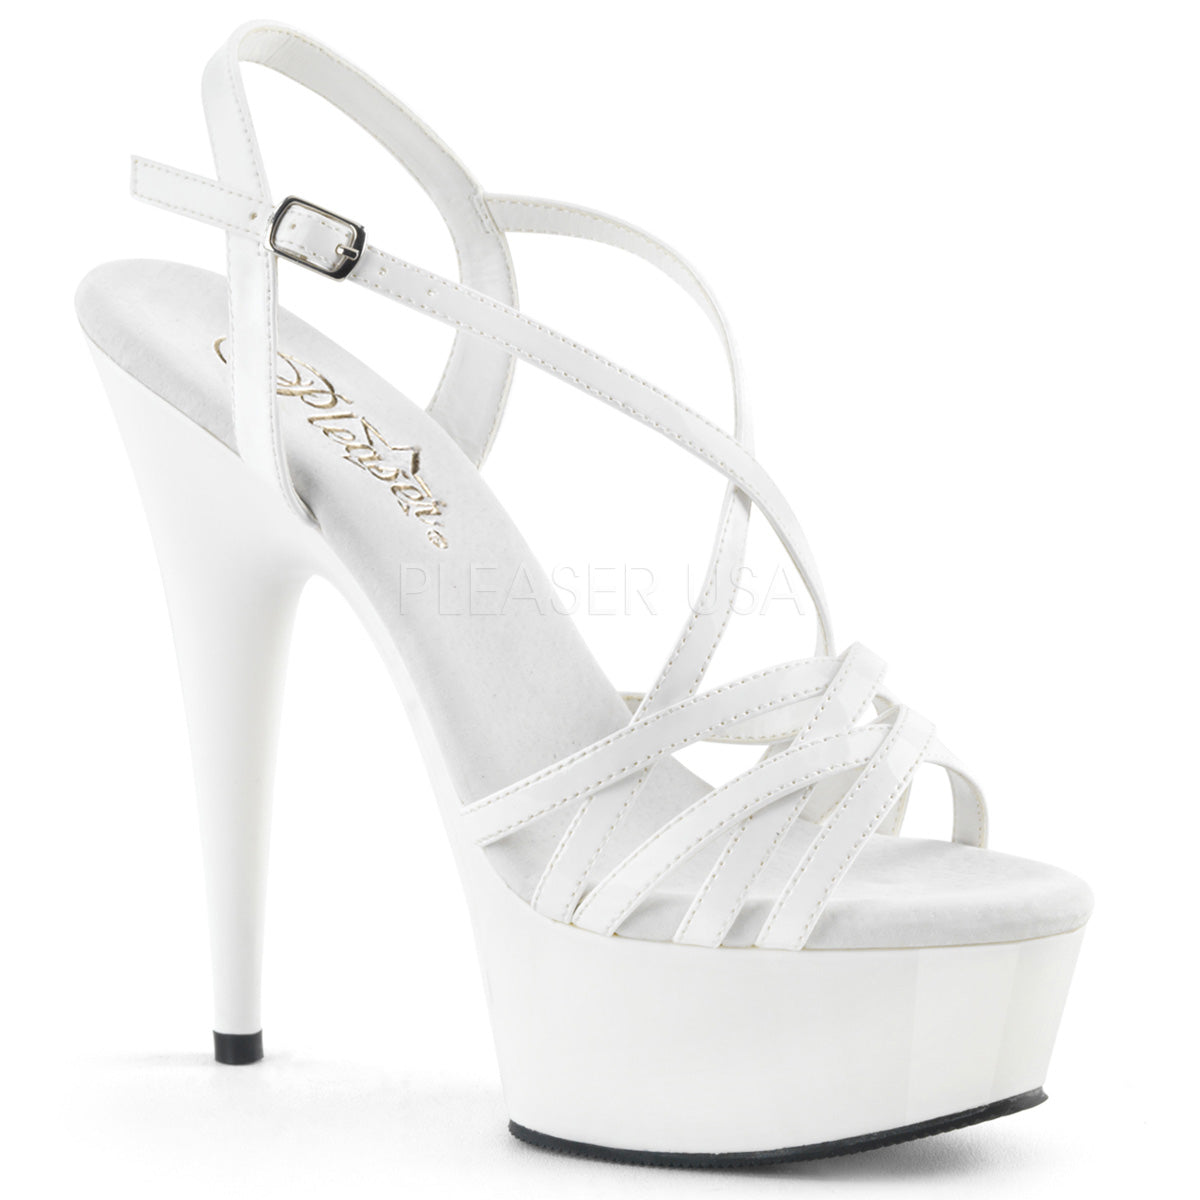 6 Inch Heel DELIGHT-613 White – Shoecup.com